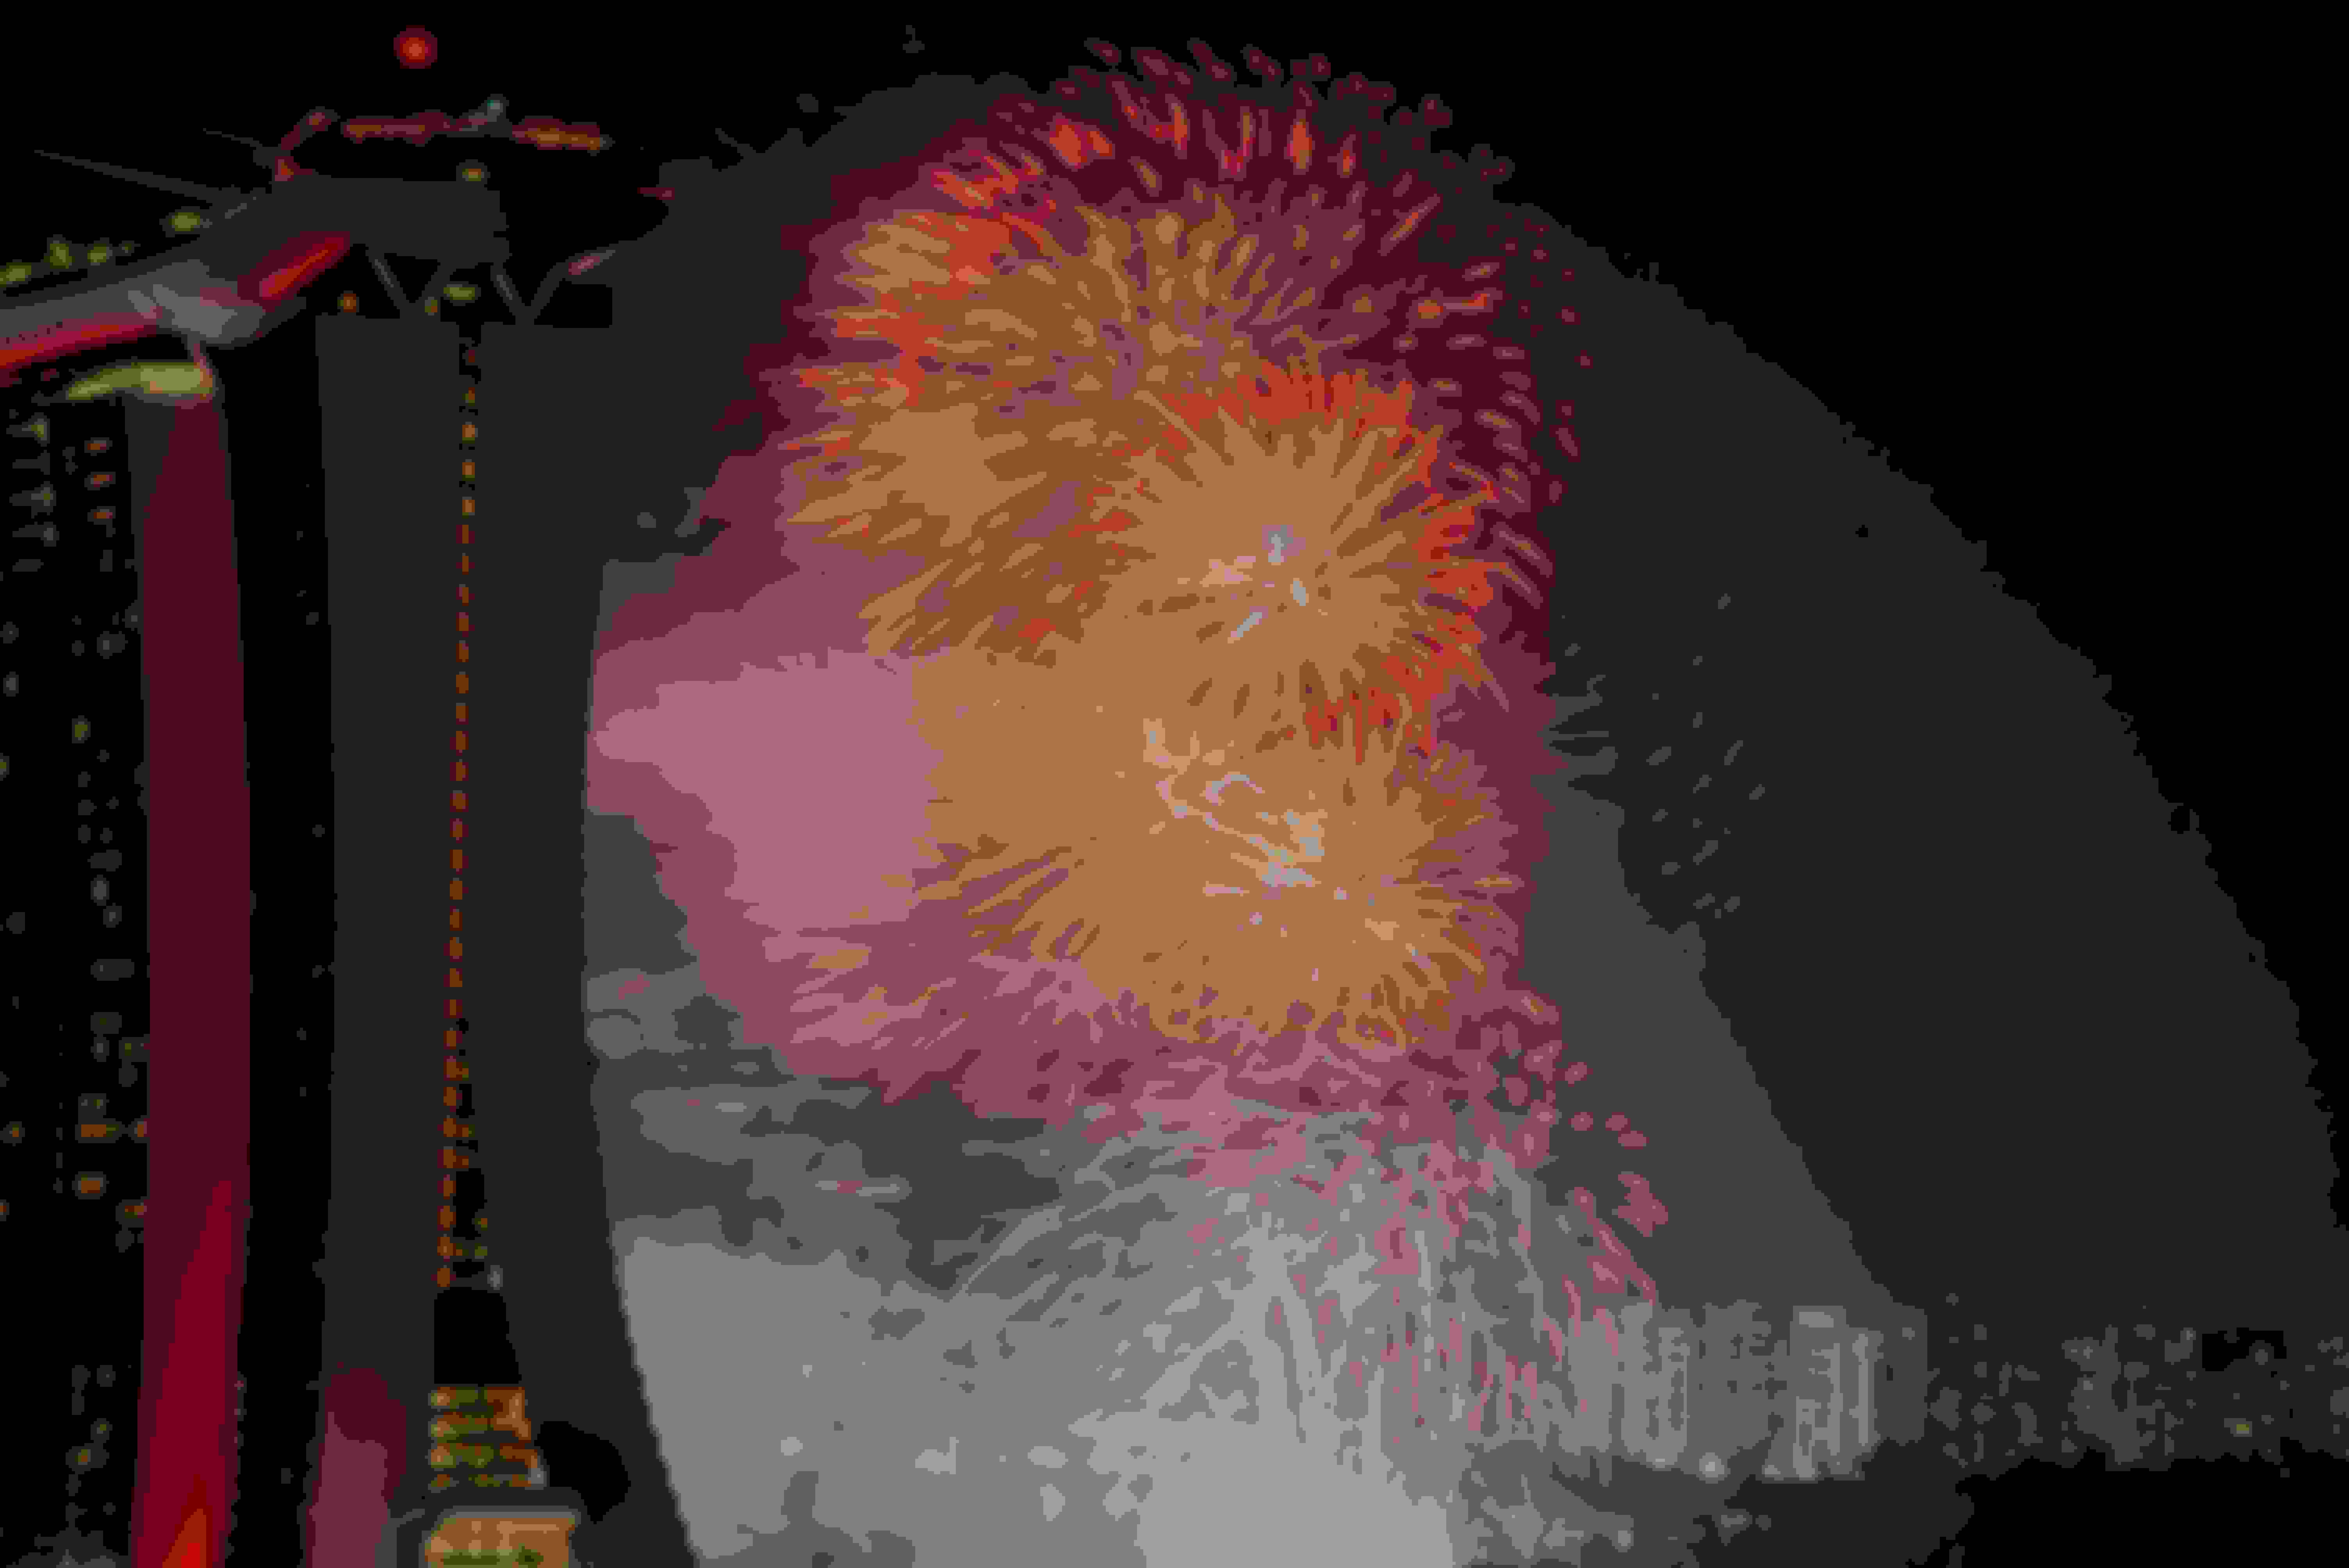 image of fireworks during NDP celebration